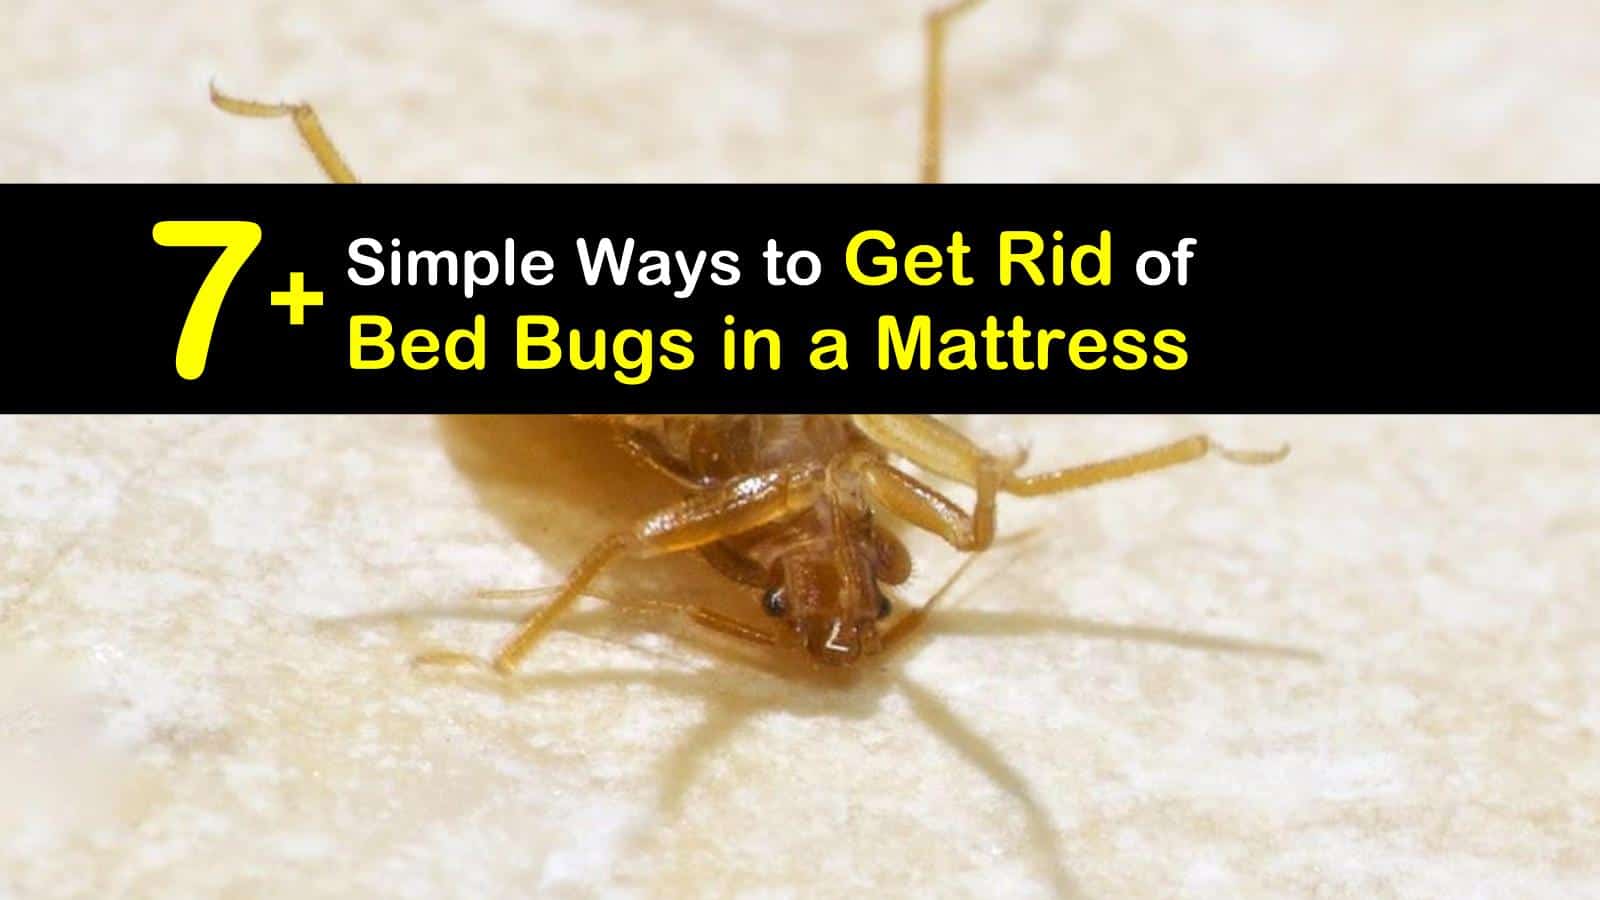 mattress bag to kill bed bugs